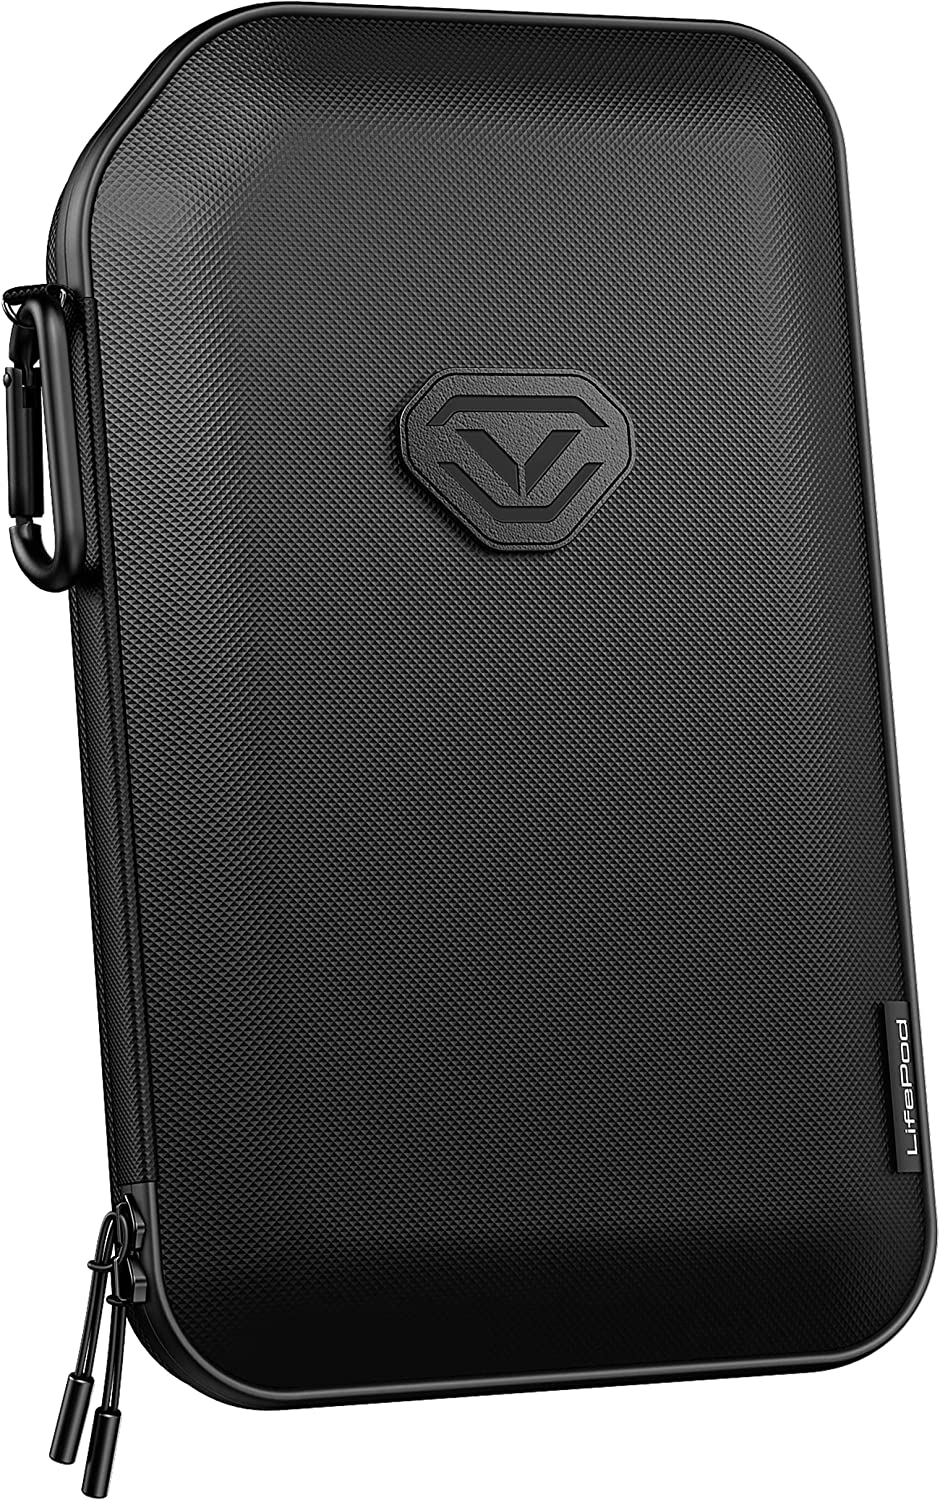 Vaultek - lifepod zip travel case slim pouch - black - MODLOCK